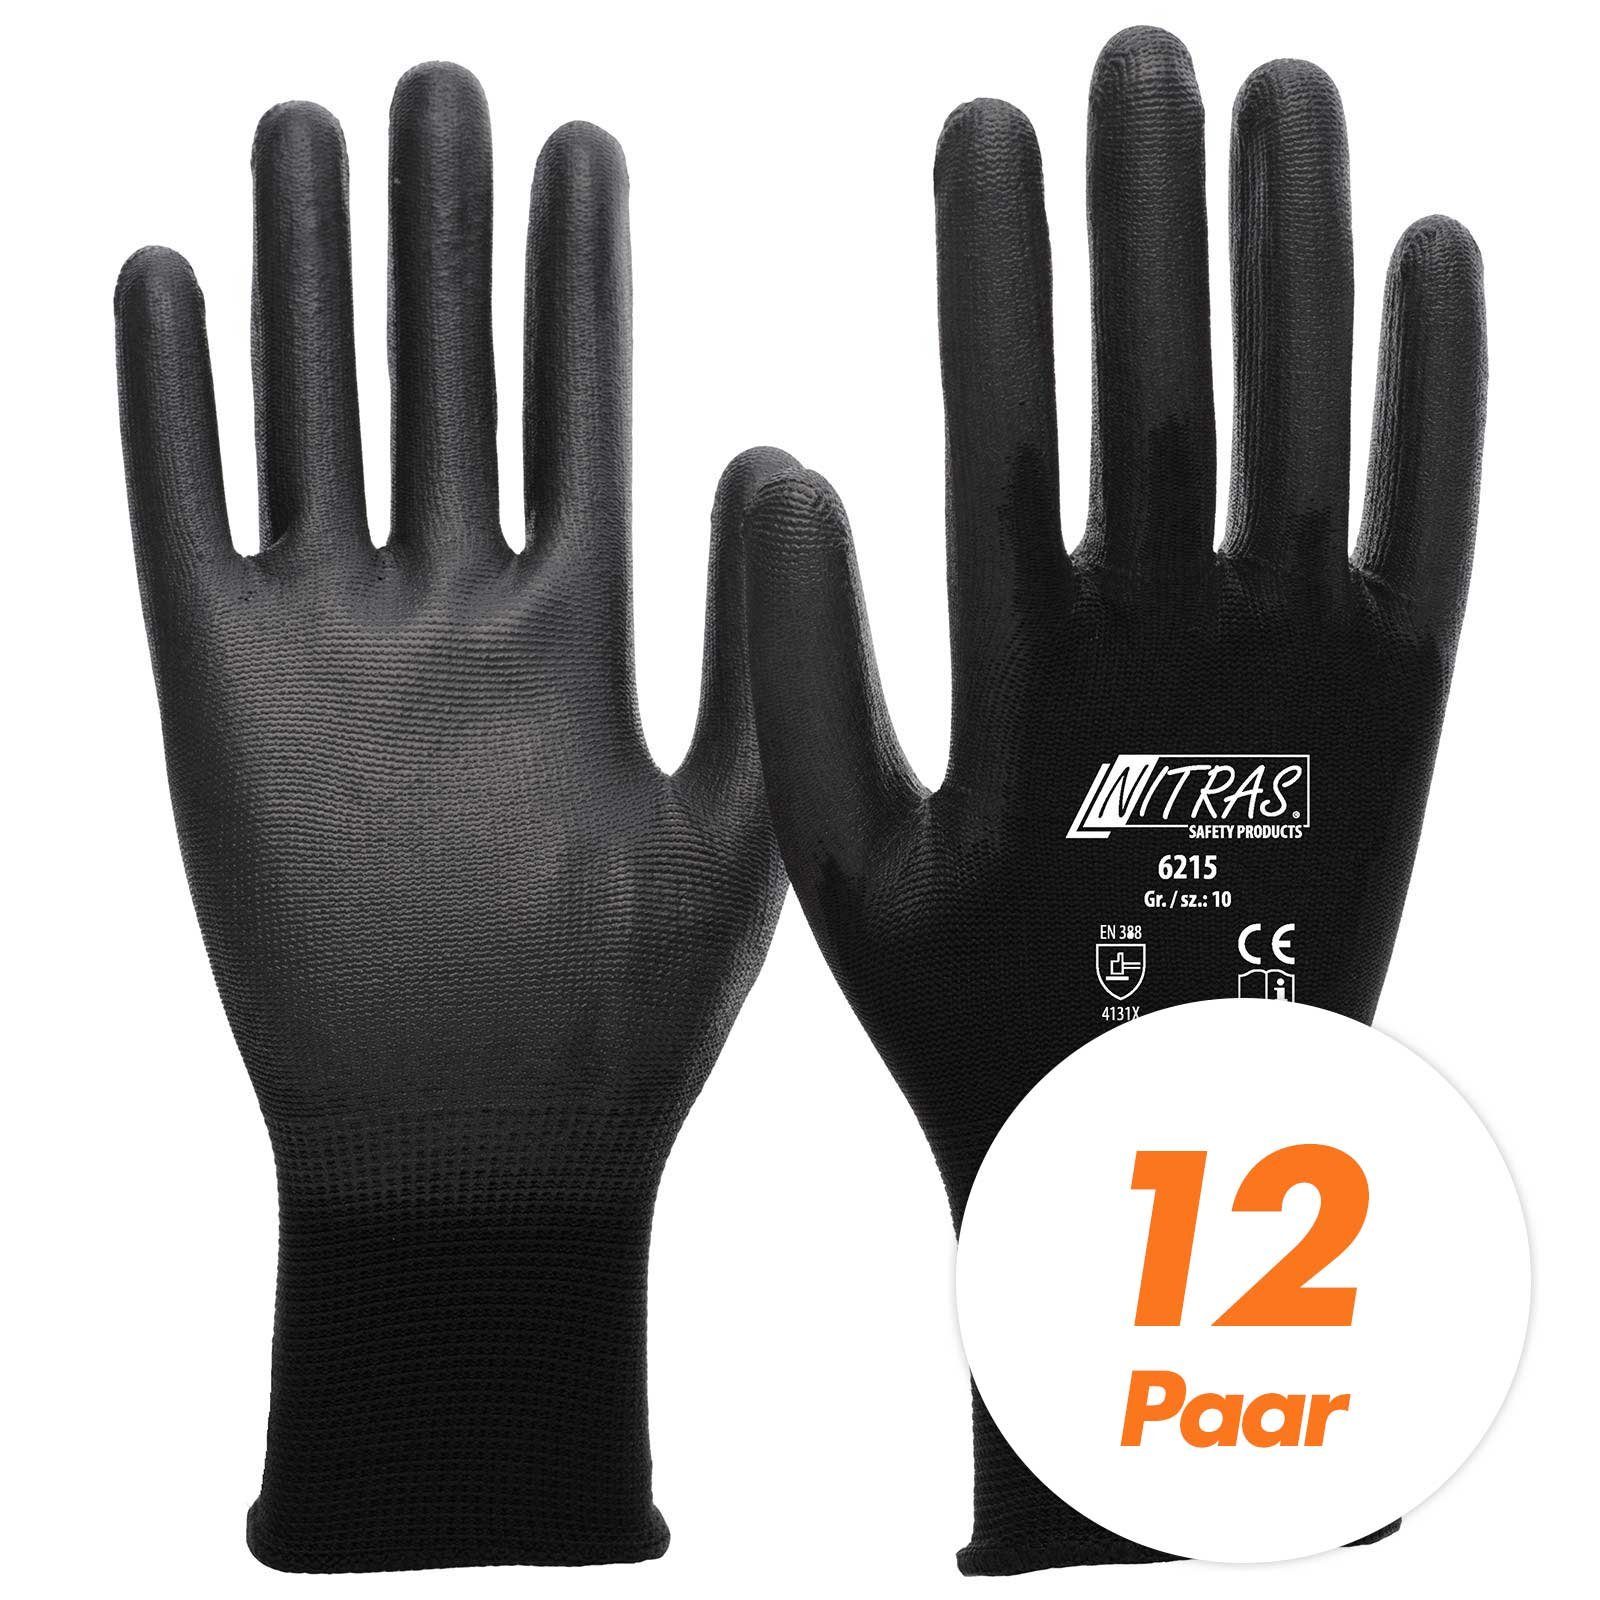 Nitras Nitril-Handschuhe 6215 Nylon Strickhandschuh, Schutzhandschuhe - VPE 12 Paar (Spar-Set)